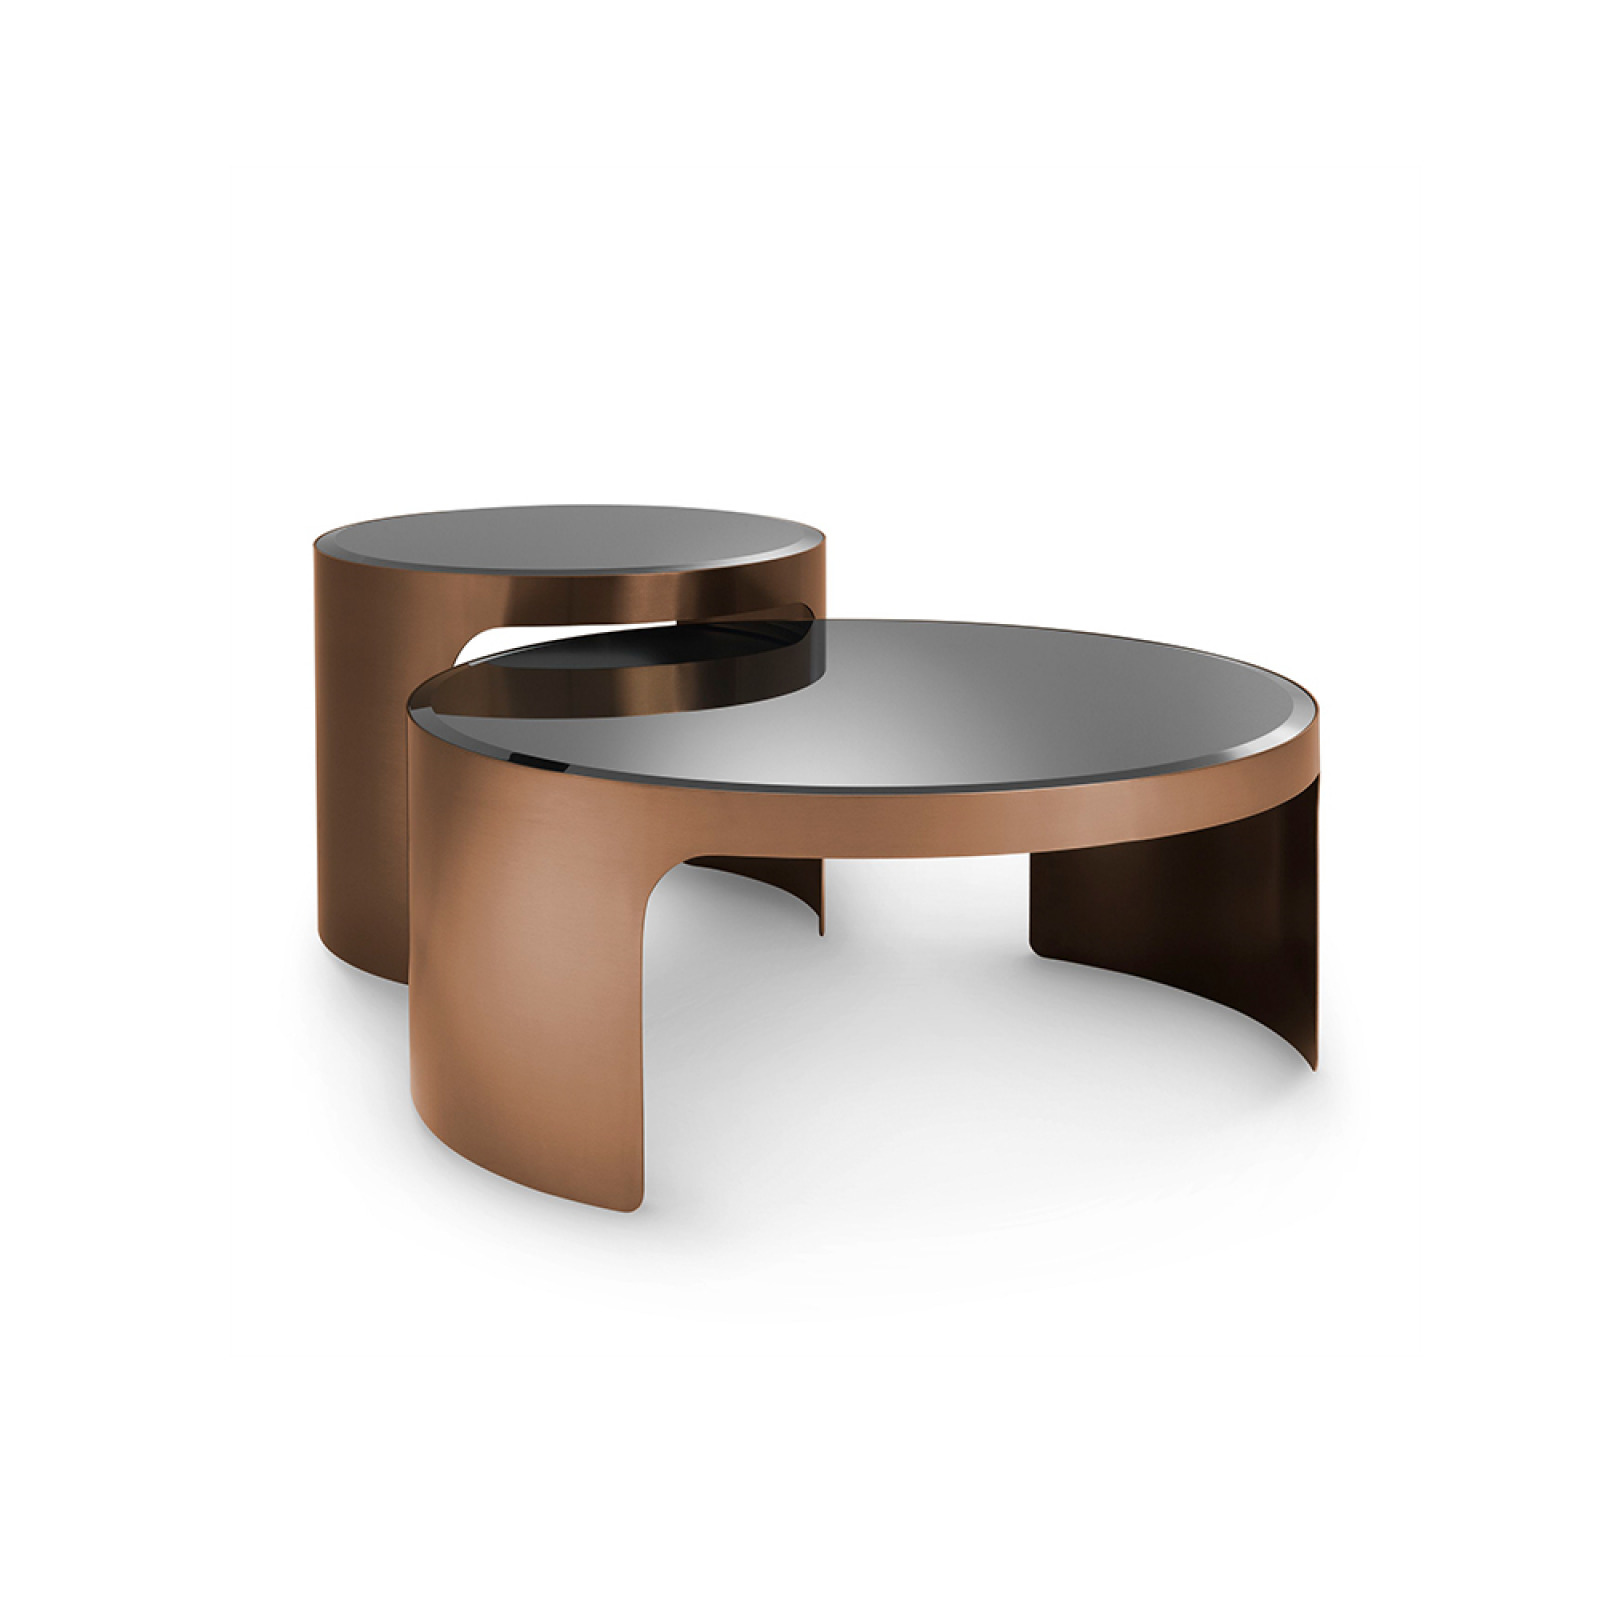 Piemonte Copper coffee table